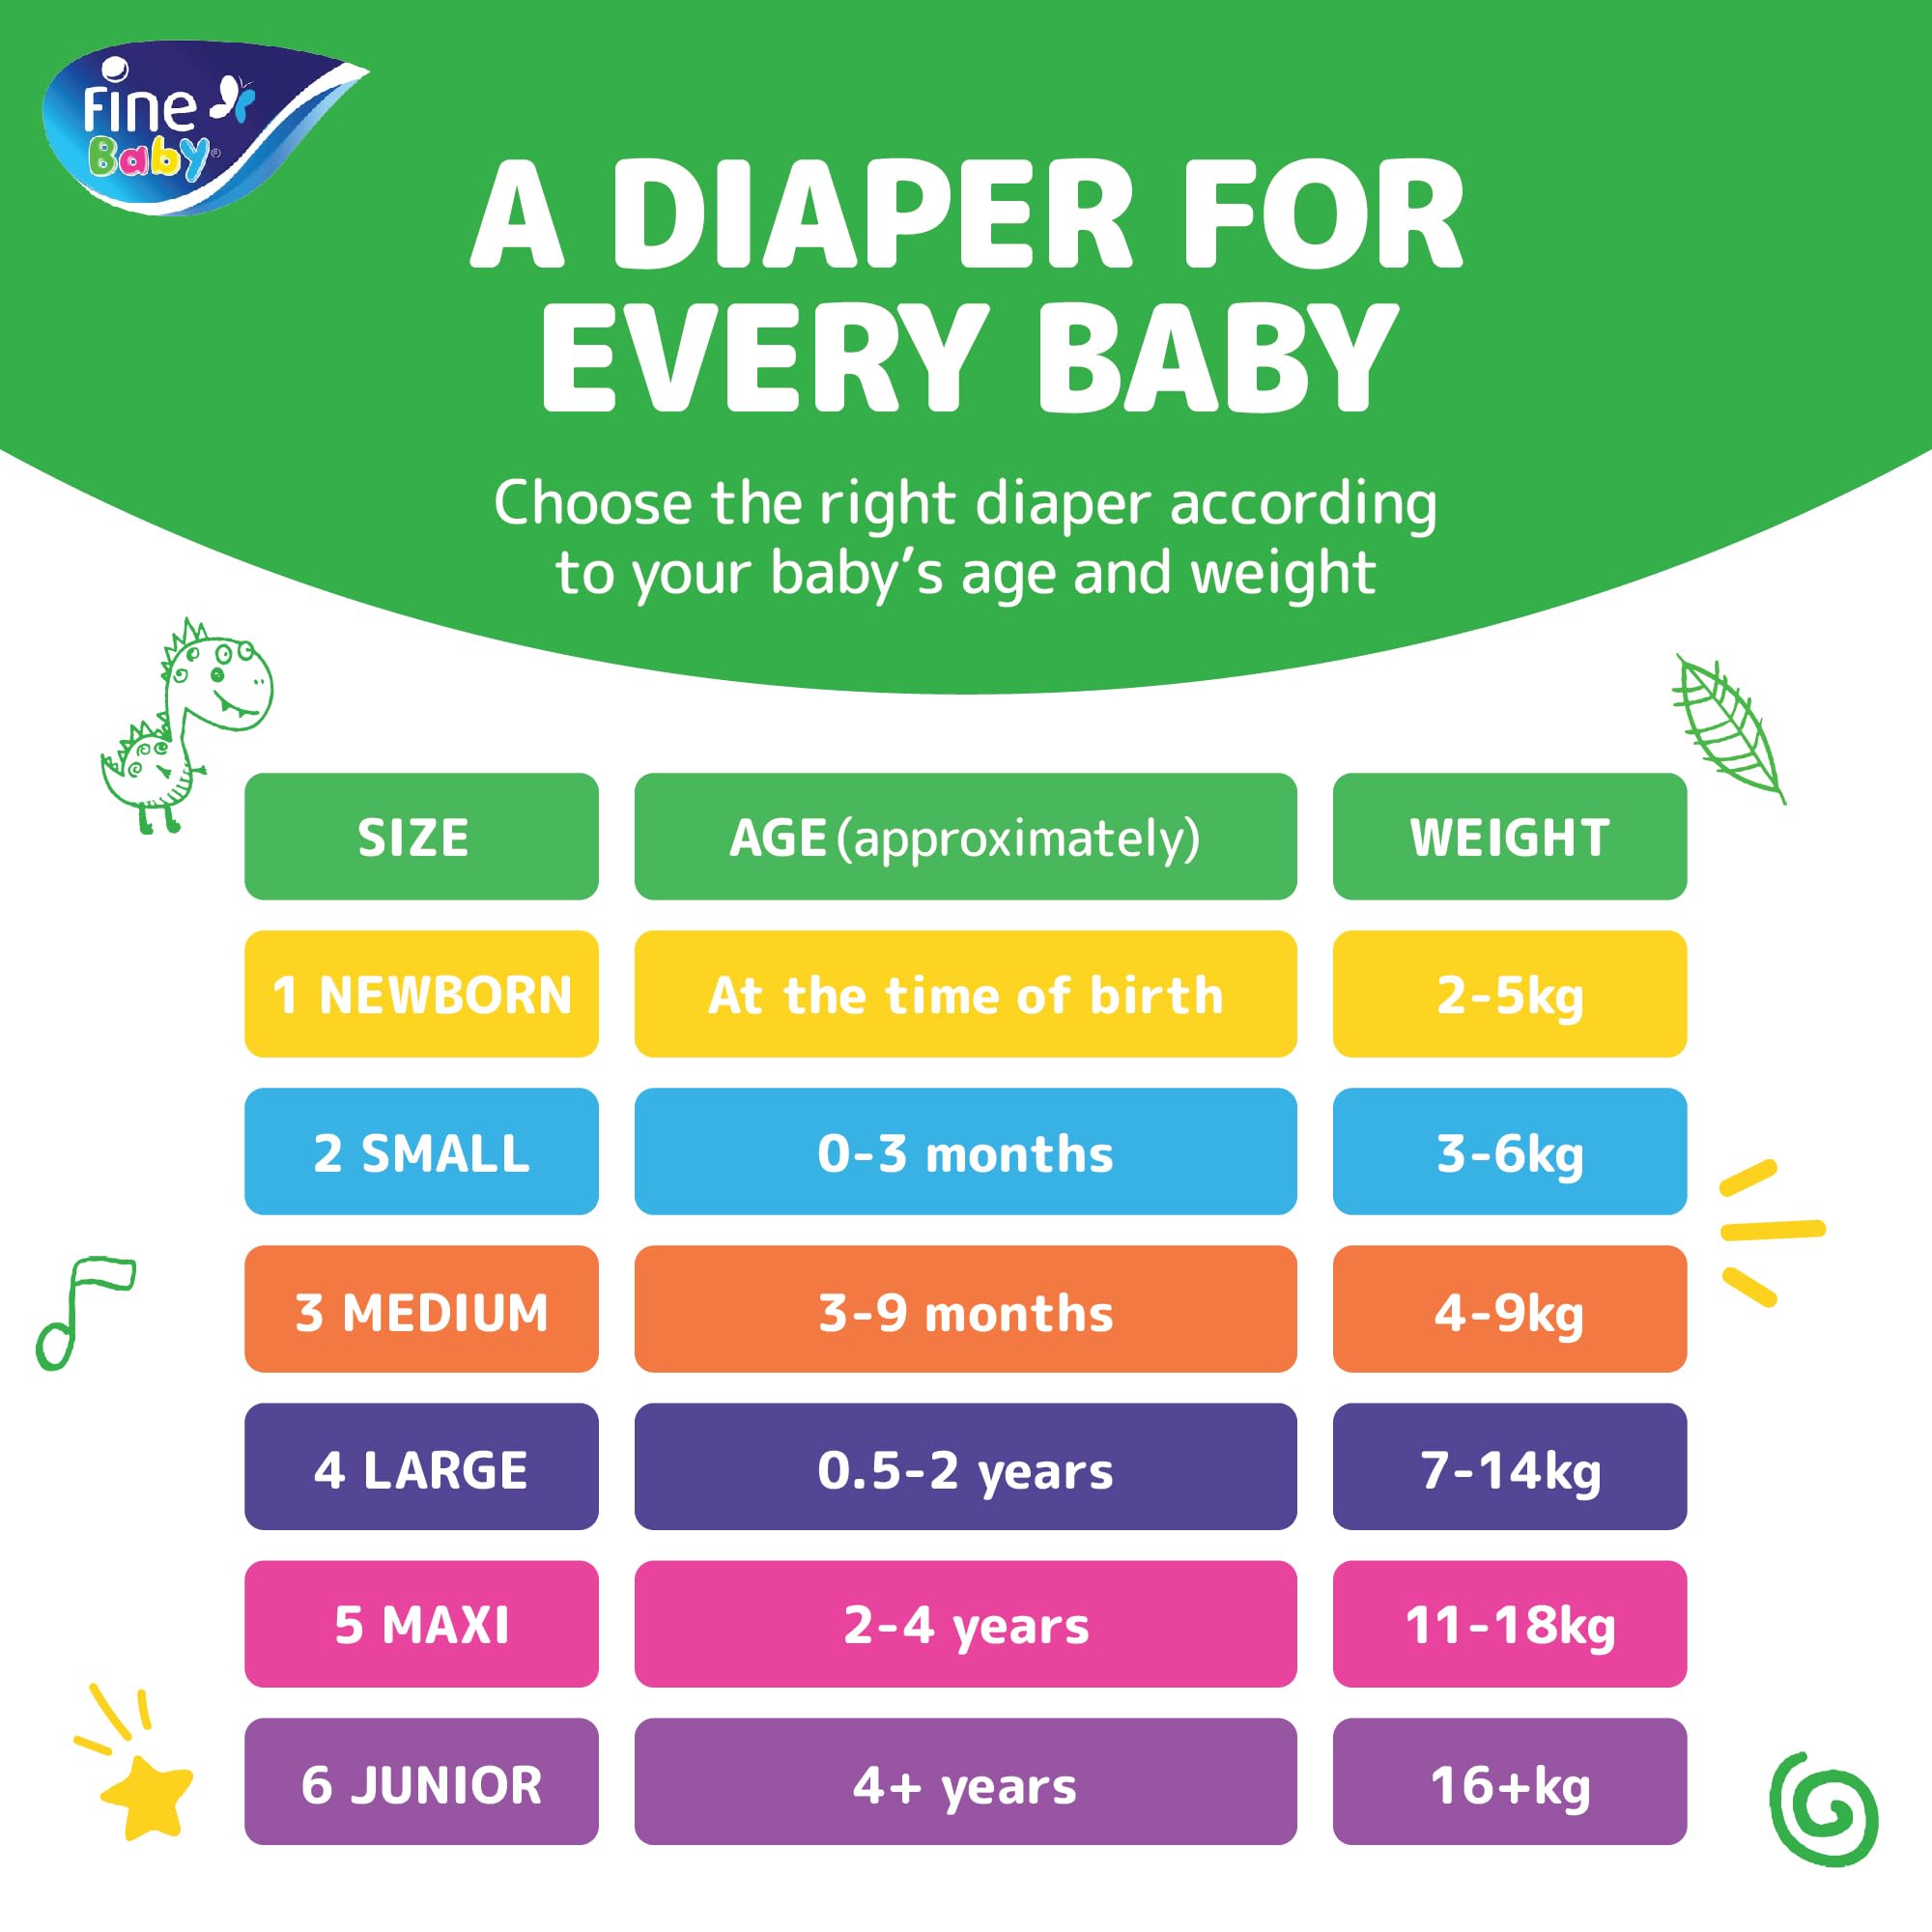 Fine Baby Diapers with the New Double Lock Size 6 Junior 16+ kg, 144 Count (36x4) حفاظات فاين بيبي بلوشن لمسة الأم، حجم جونيور 22+ كغم، العبوة الكبيرة 144 حفاظة